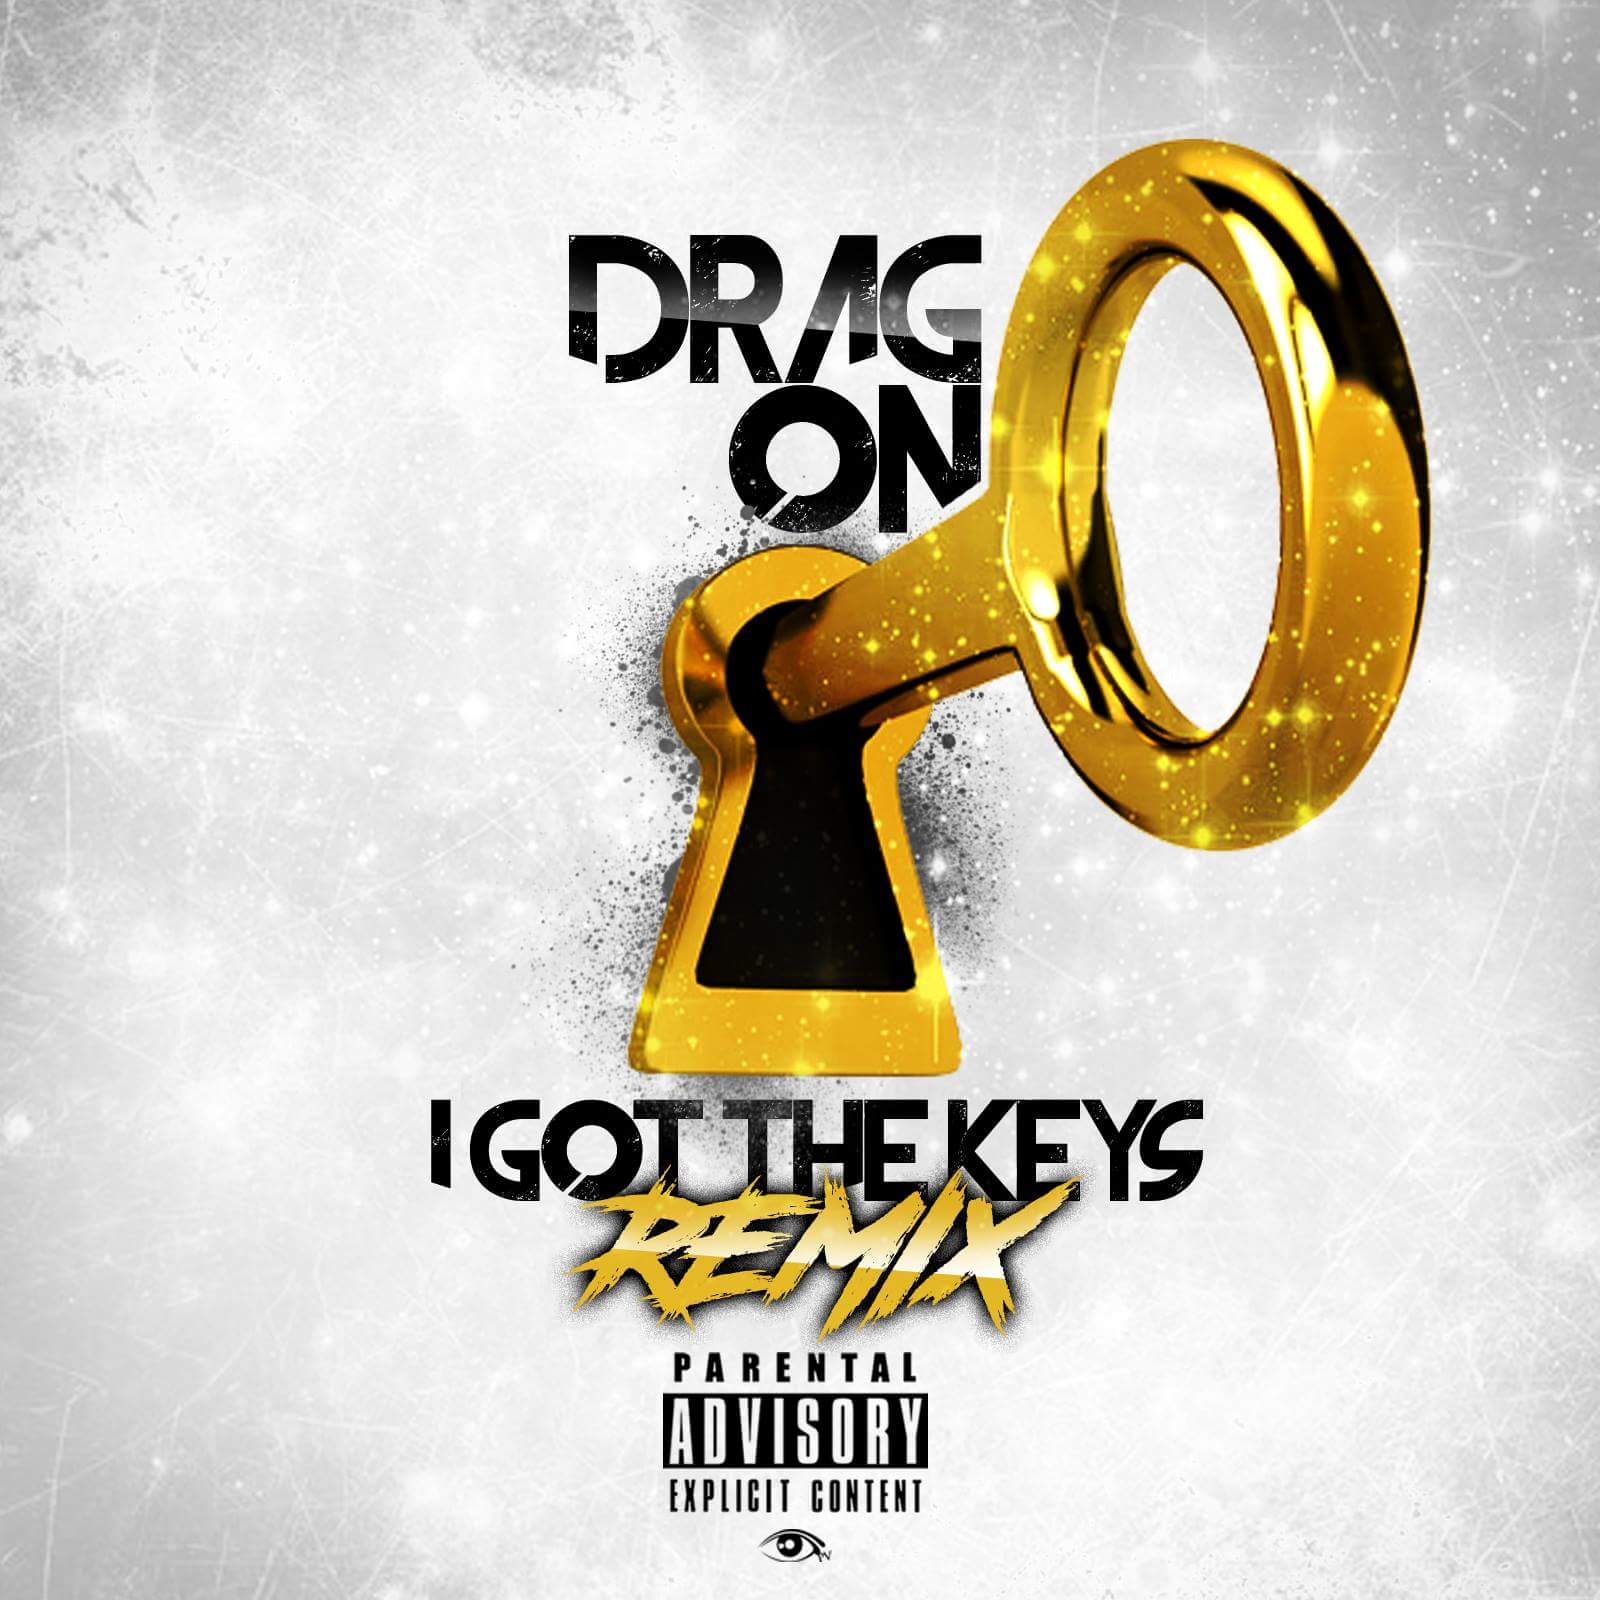 Drag-On Drops New Single - "I Got The Keys" Remix